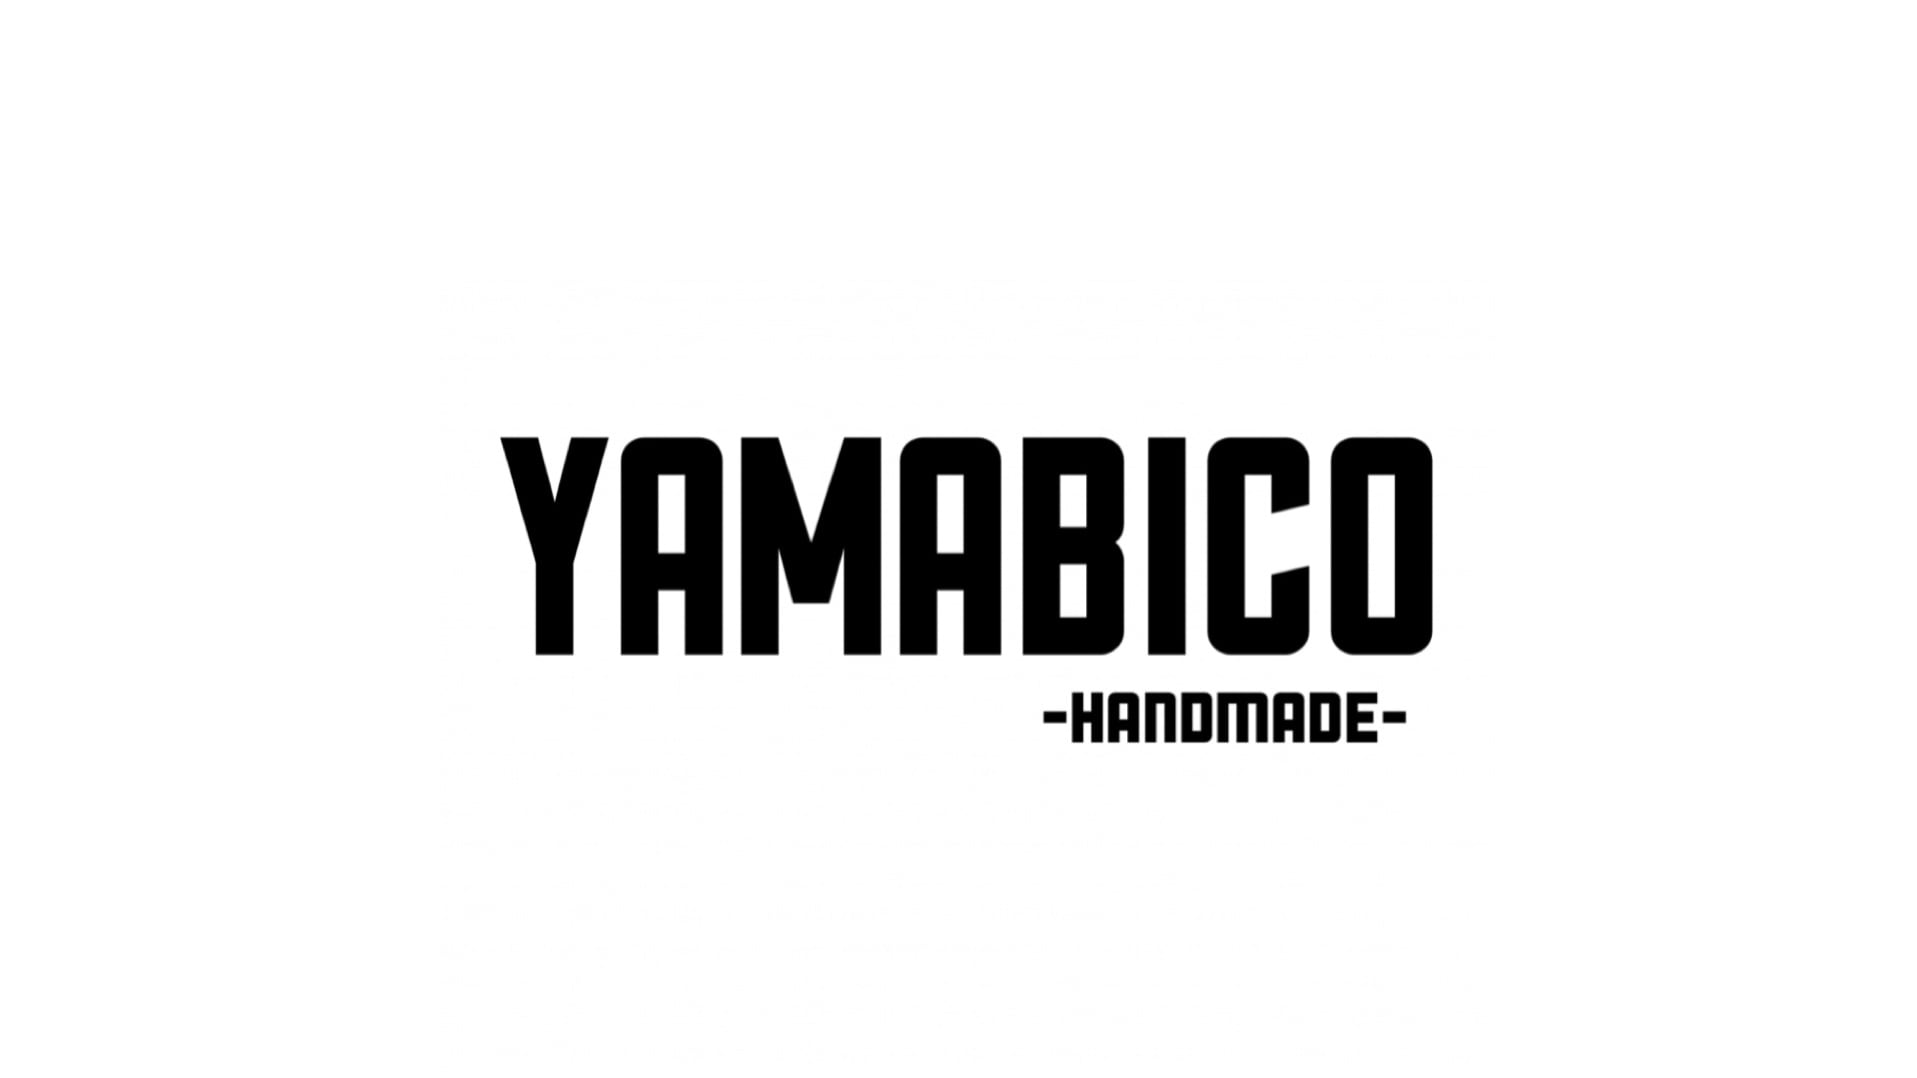 YAMABICO -Hand made -